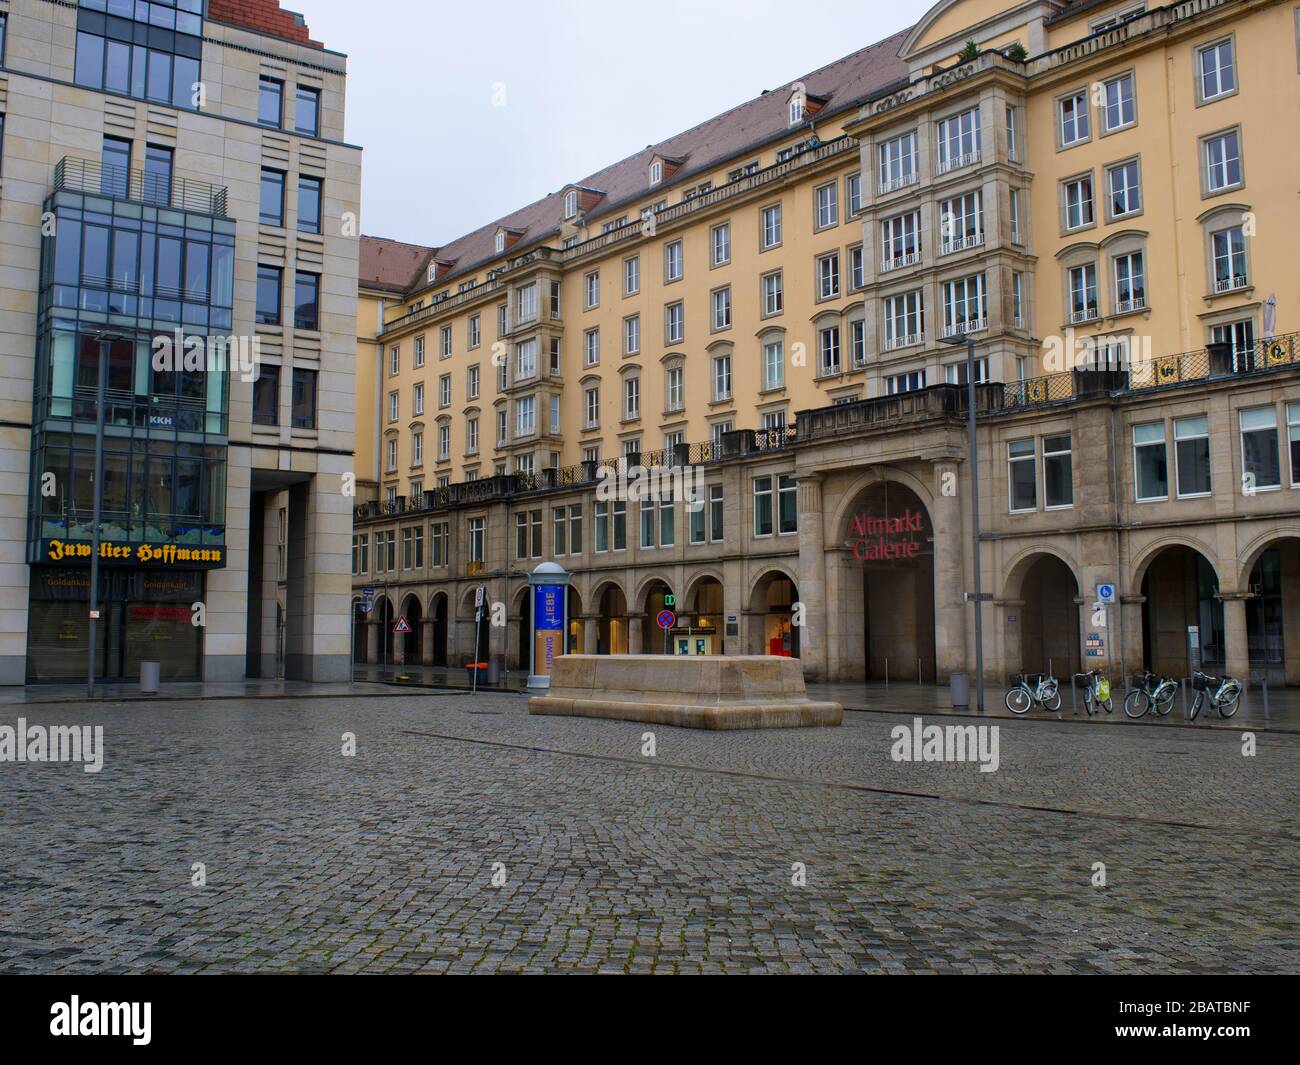 Altmarkt-Galerie a Dresda während Coronavirus Lockdown 2020 COVID-19 Ausgangssperre Regenwetter Regen Foto Stock